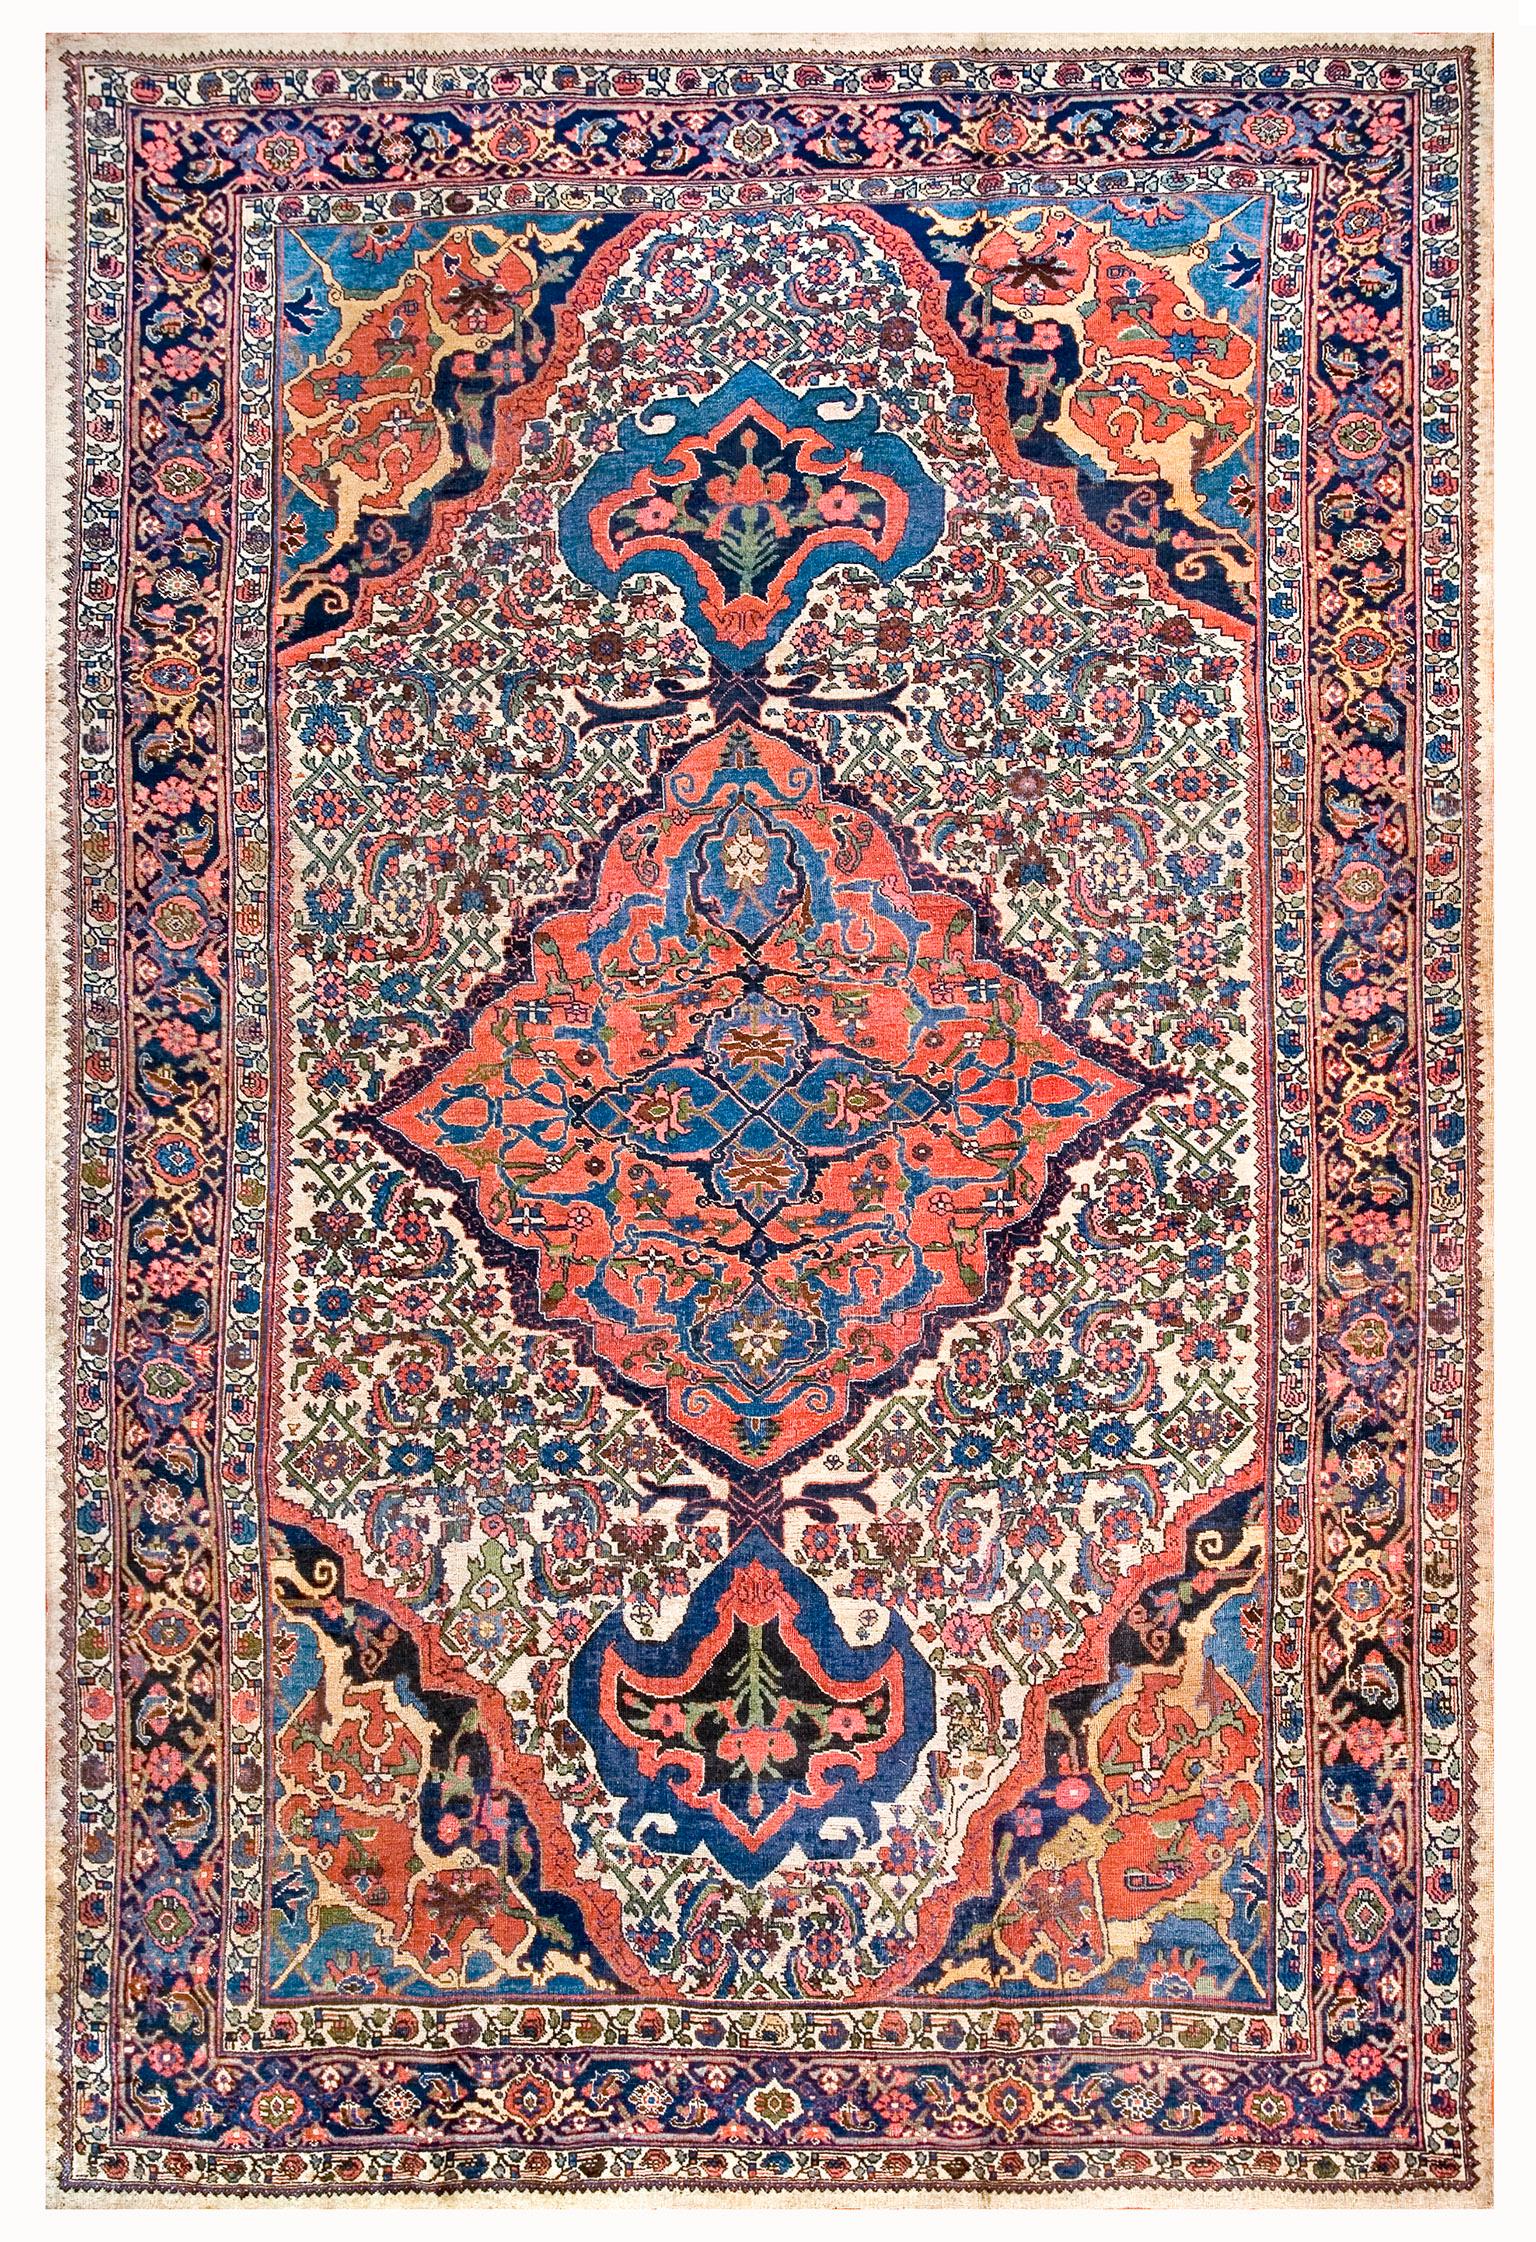 Wool Late 19th Century Persian Bijar Carpet ( 8' x 12' - 245 x 365 ) For Sale